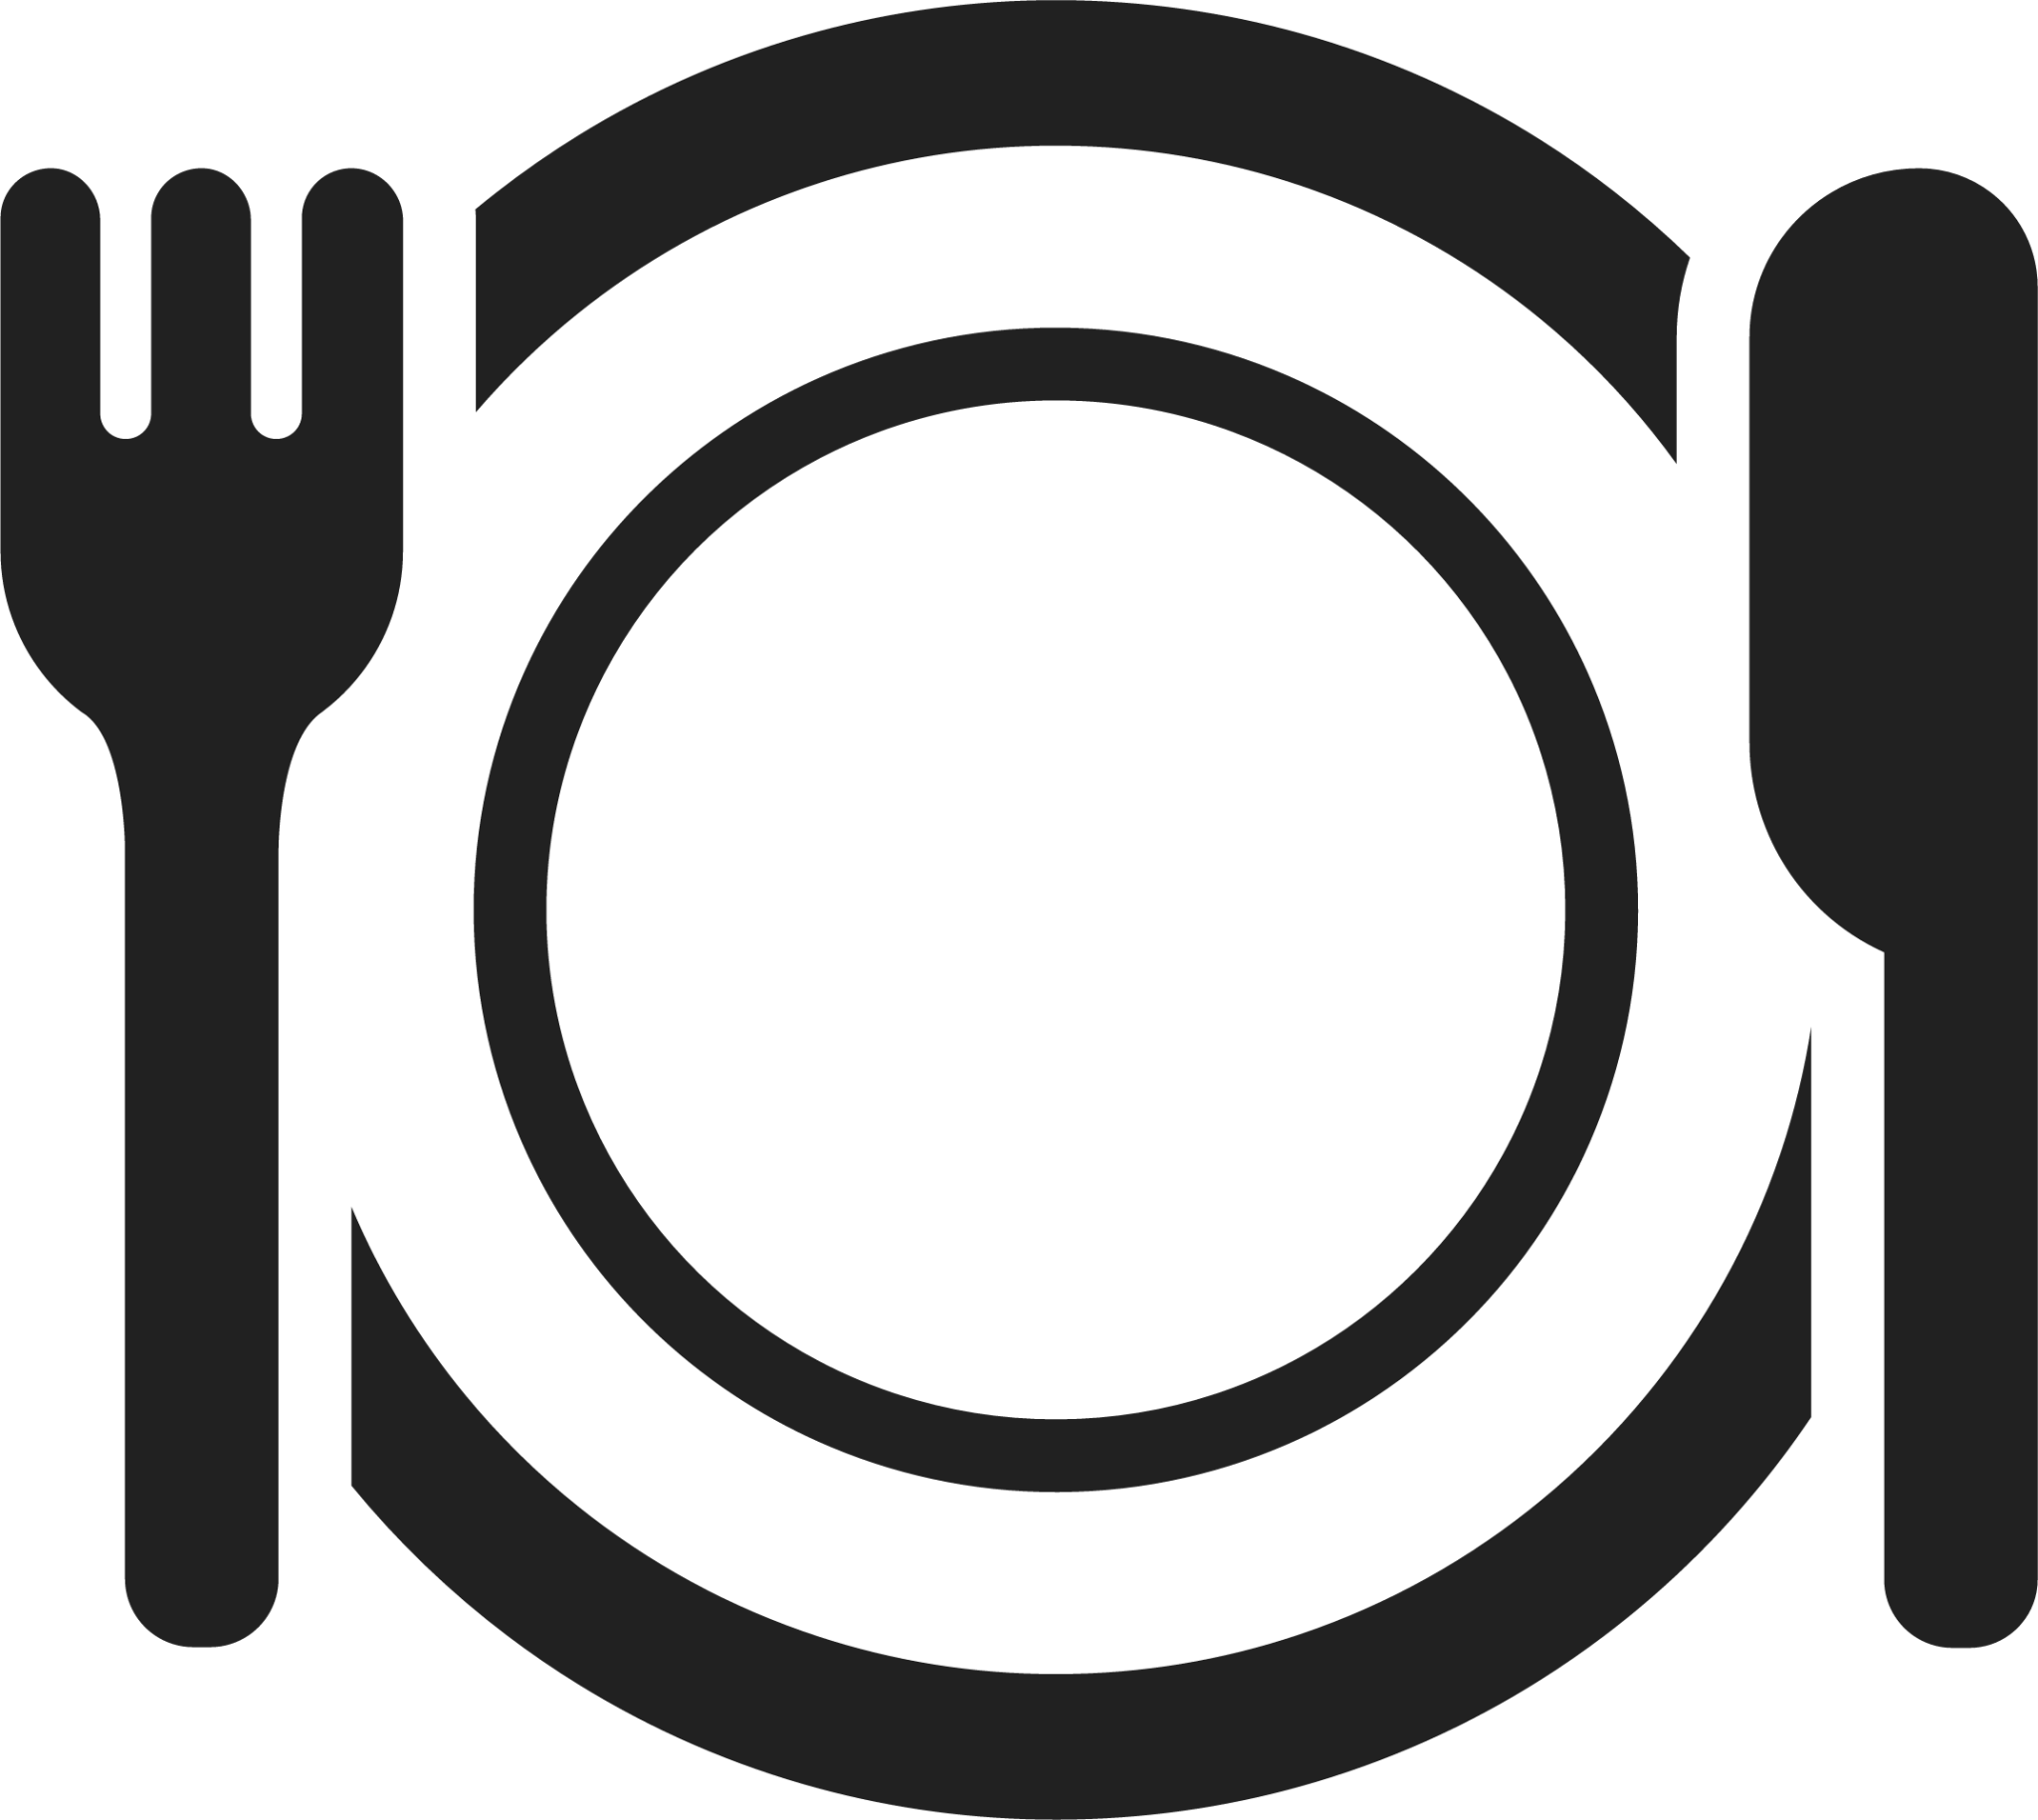 fork and knife emoji